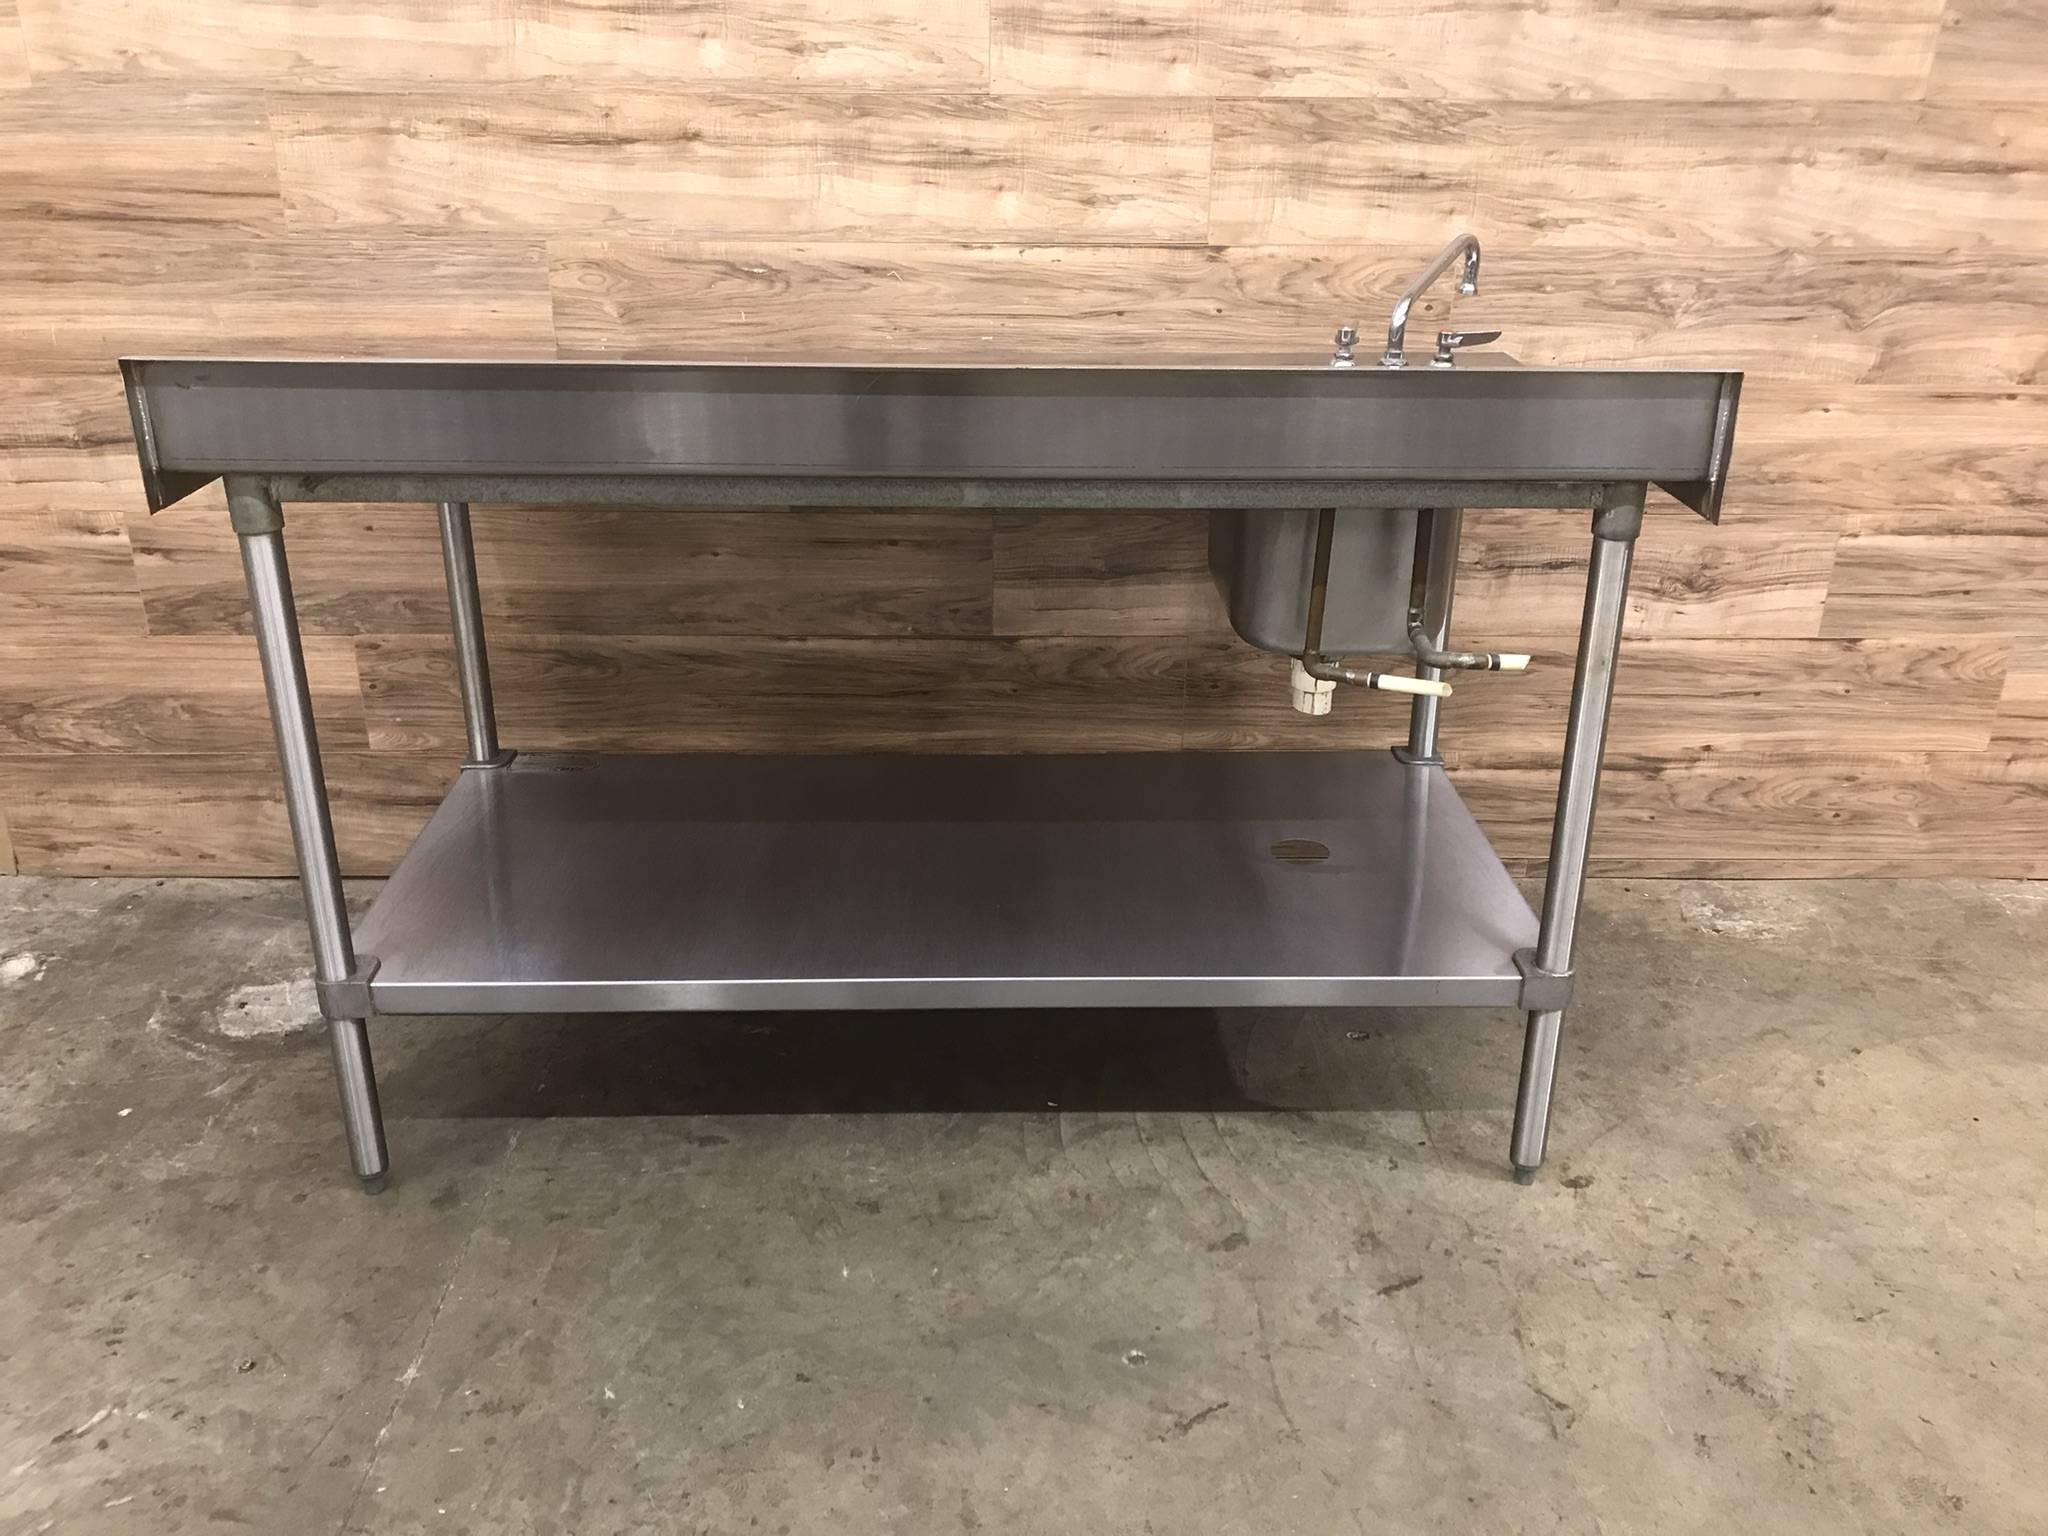 Eagle T4860SEM Stainless Steel 48 Inch x 60 Inch Work Table w/ Undershelf